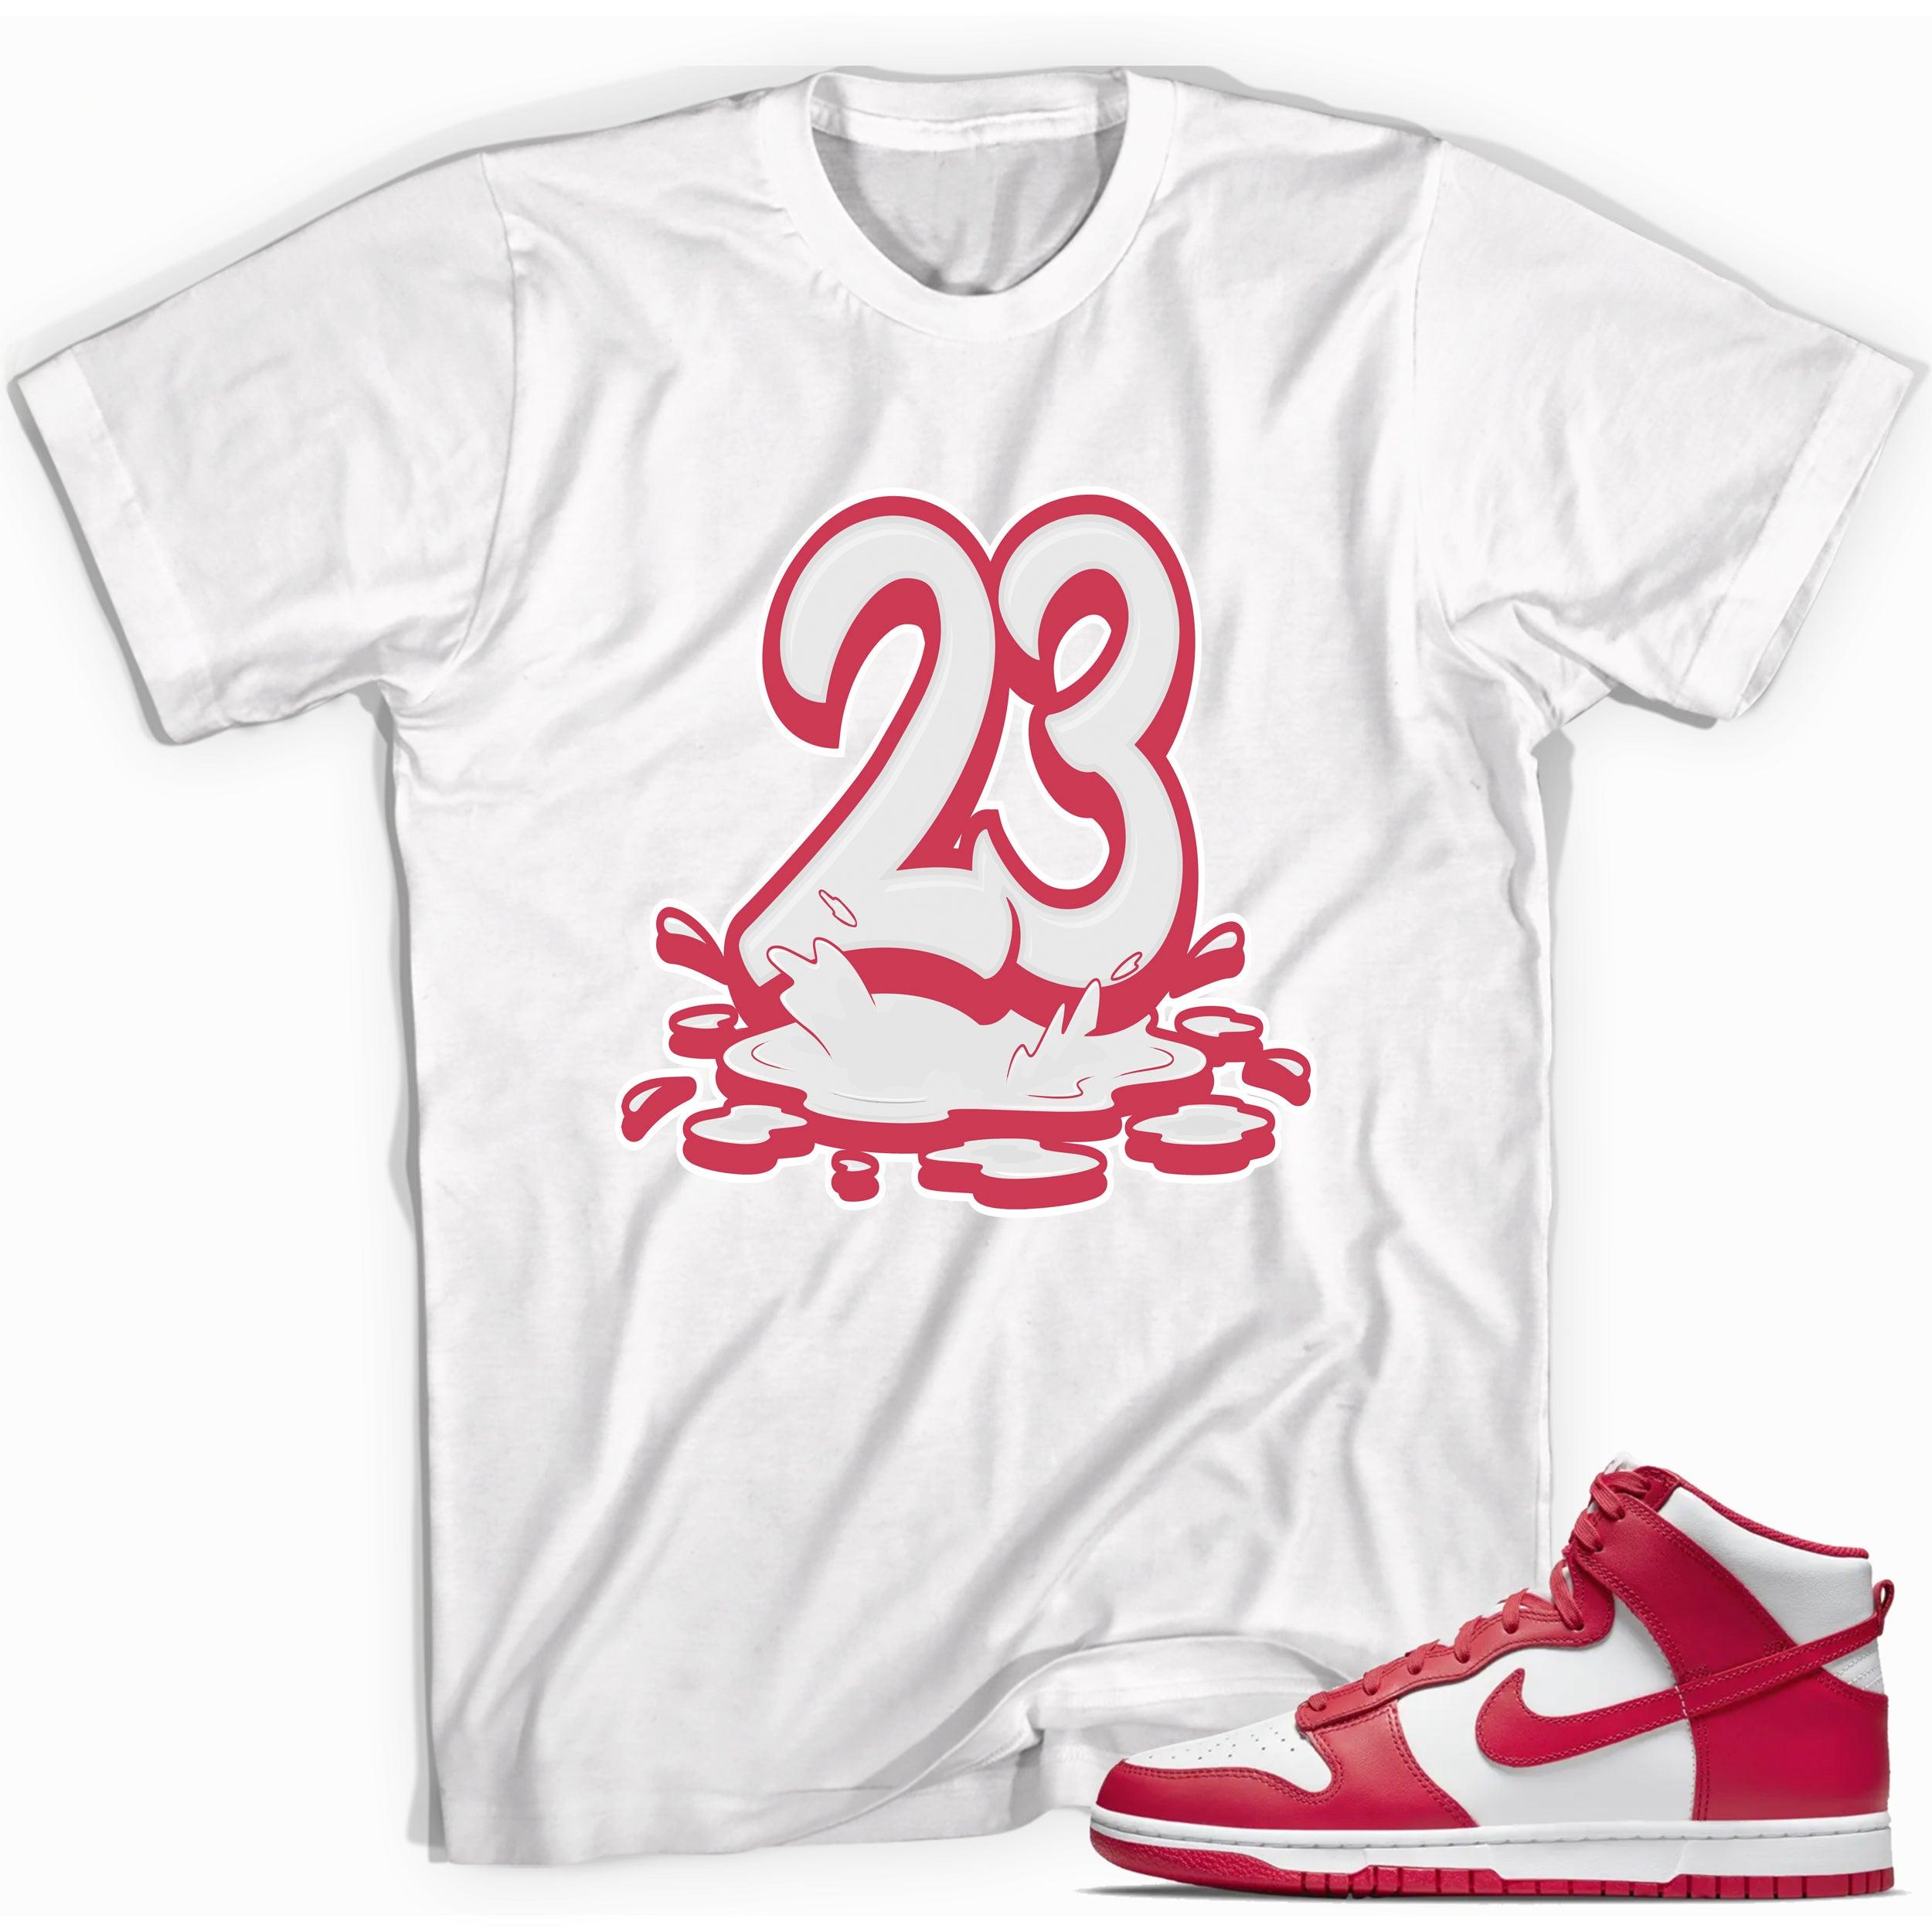 23 Melting Shirt Nike Dunk High Championship White Red photo